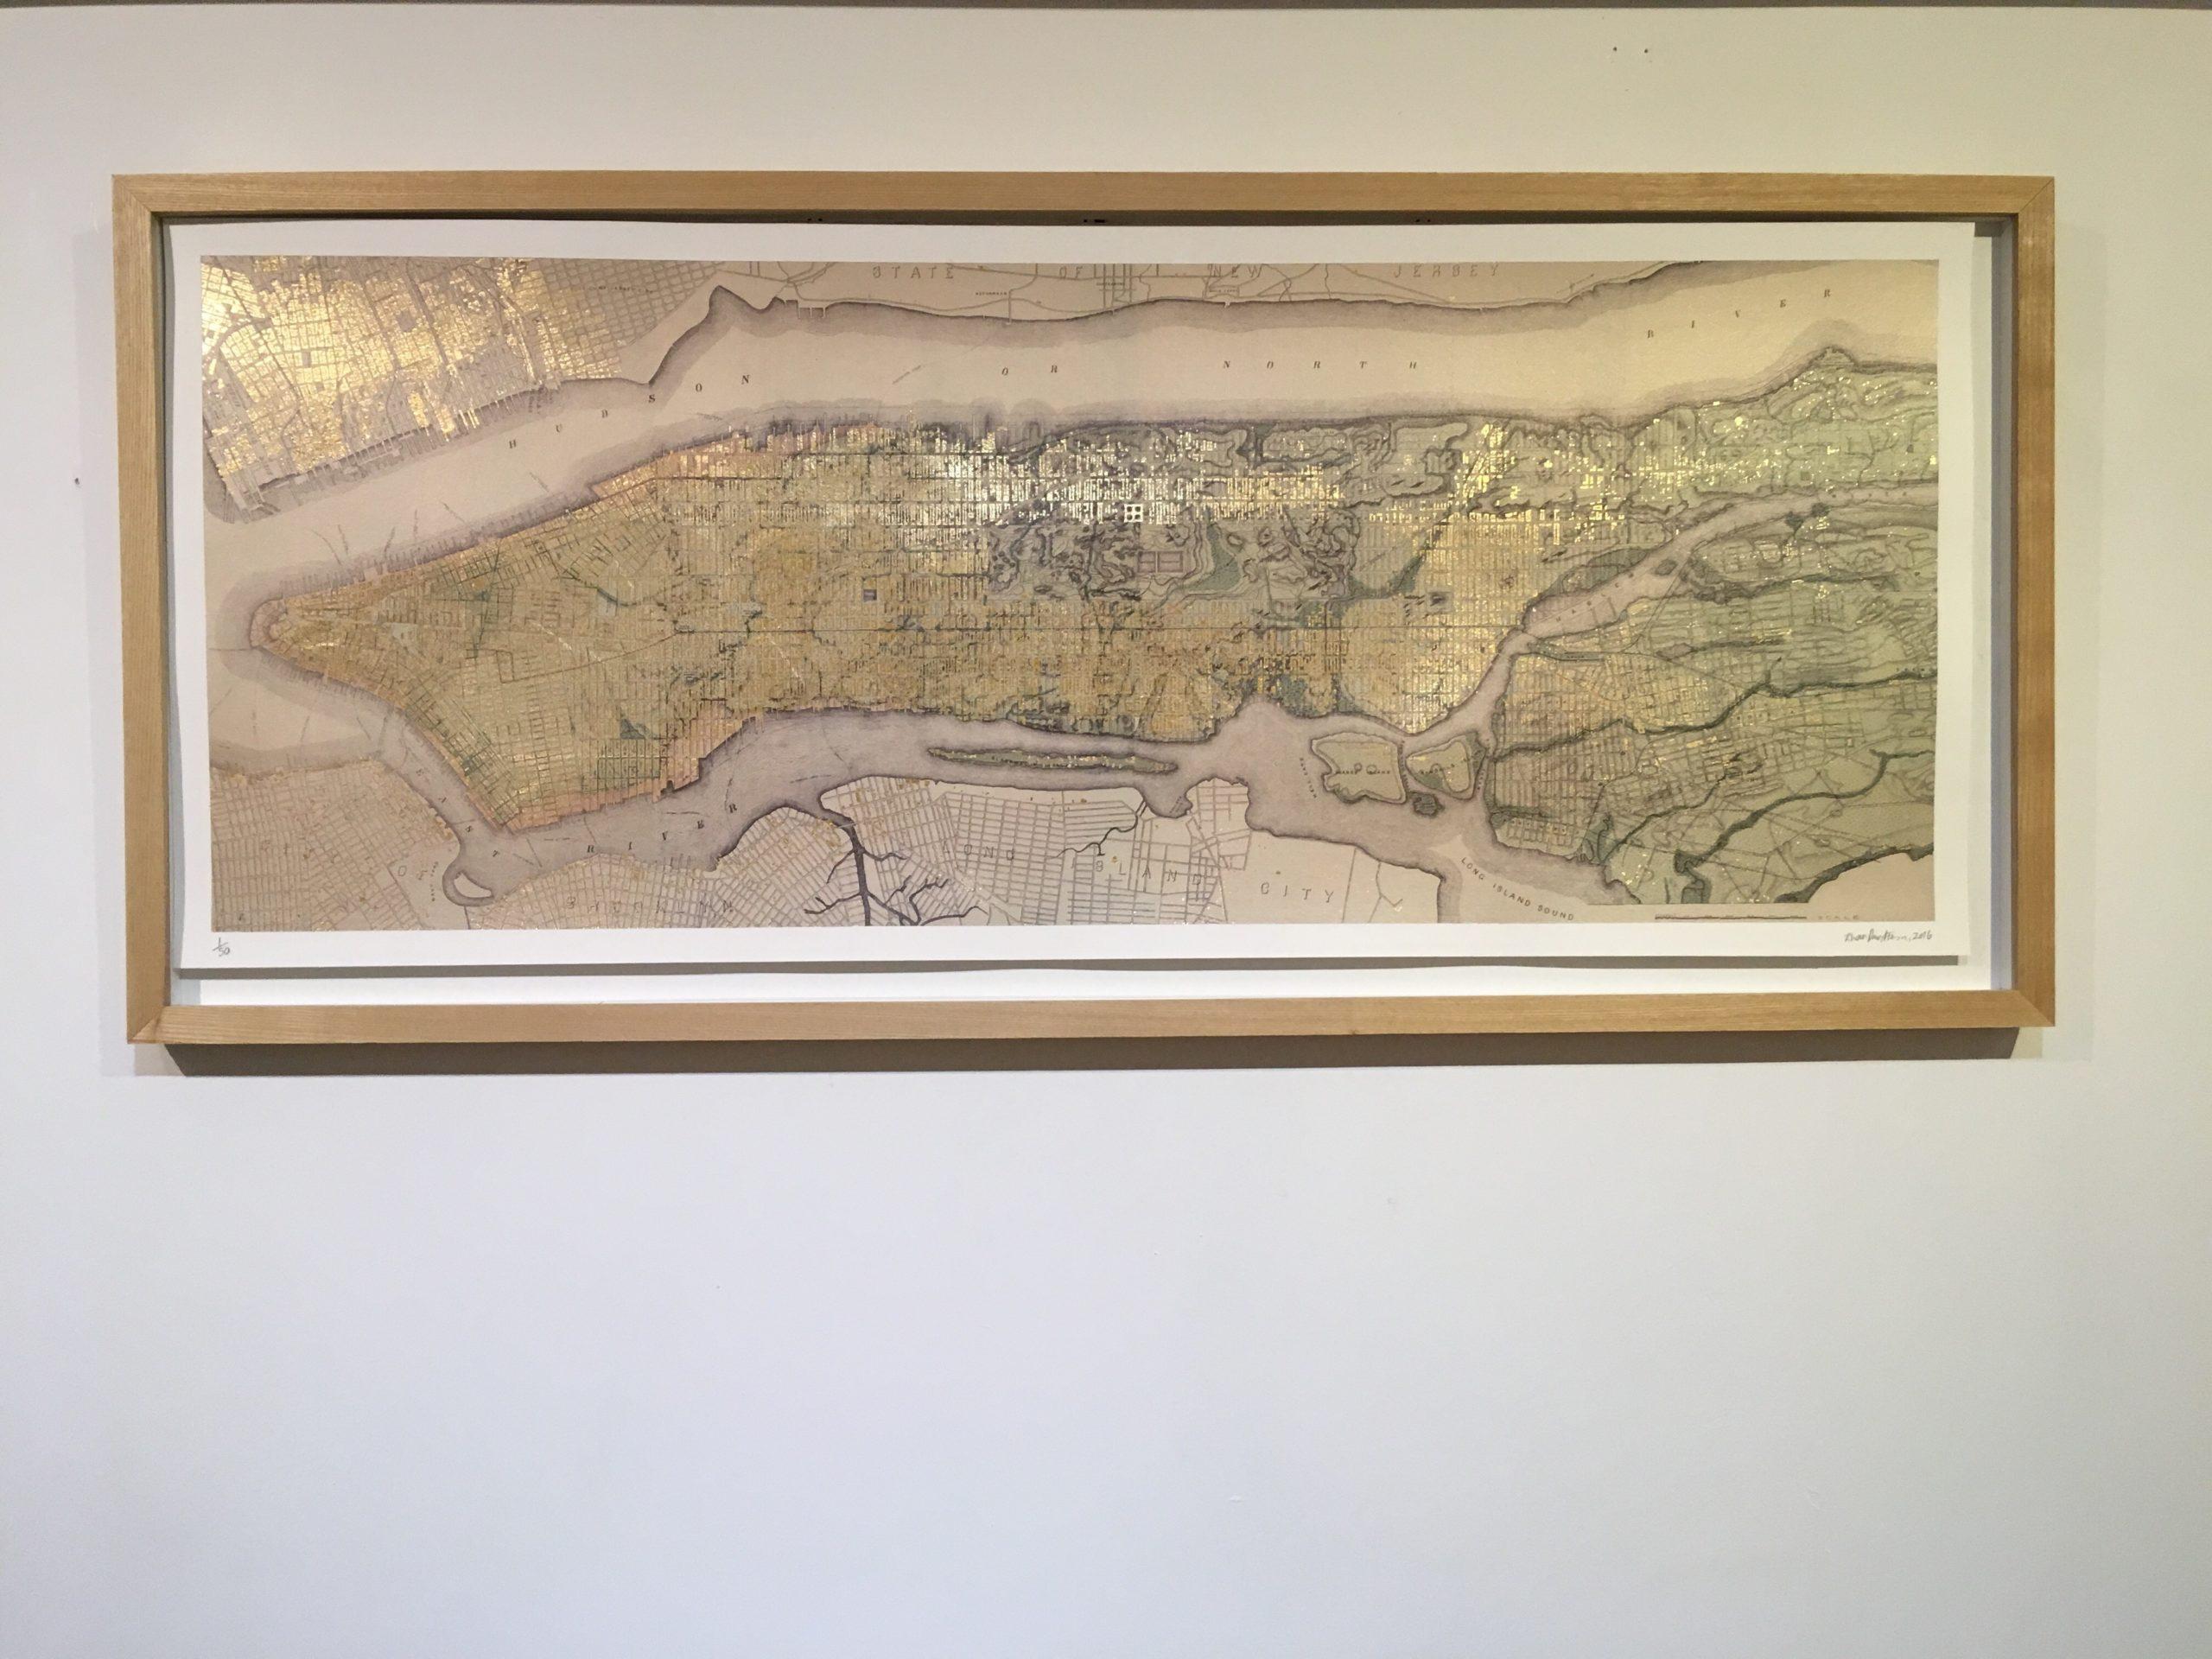 Sacred City, New York - contemporary New York Manhattan map gold leaf ink print - Print by Ewan David Eason